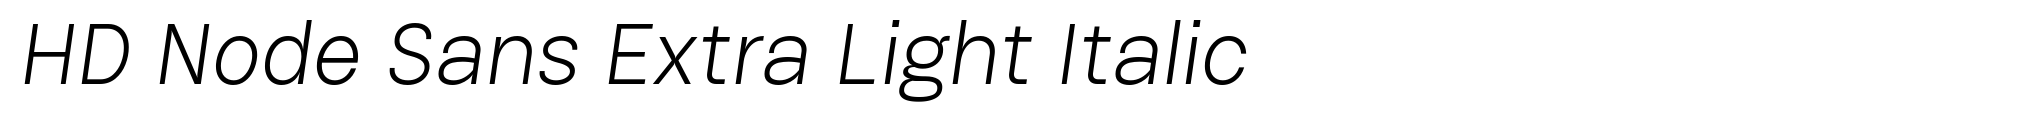 HD Node Sans Extra Light Italic image